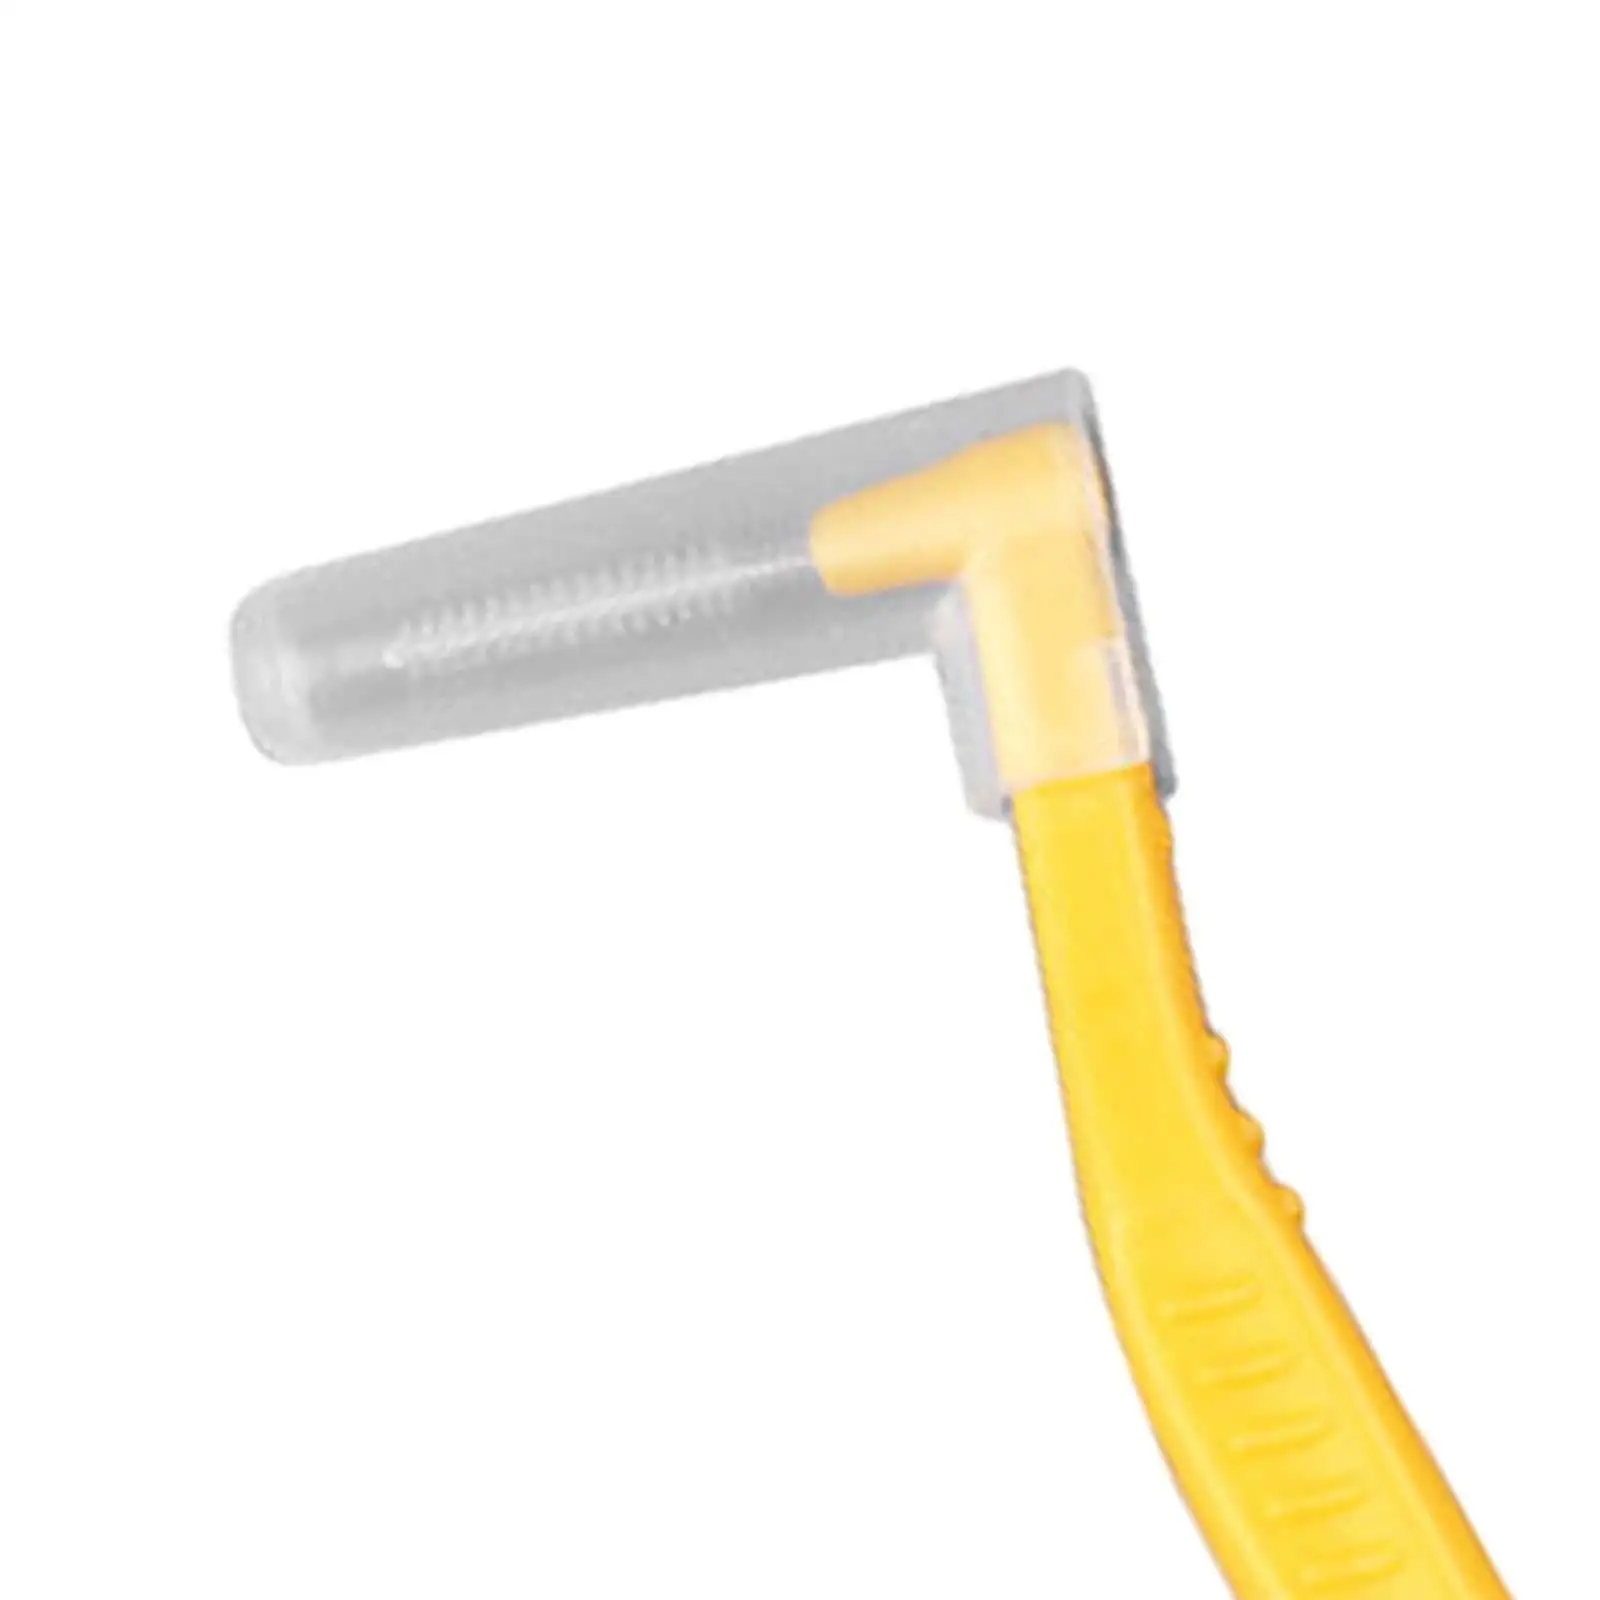 3Pcs Airbrush Cleaning Kits Airbrush Spray Cleaning Repair Tool Mini Airbrush Cleaning Brush Set for Airbrush Repair Accessories